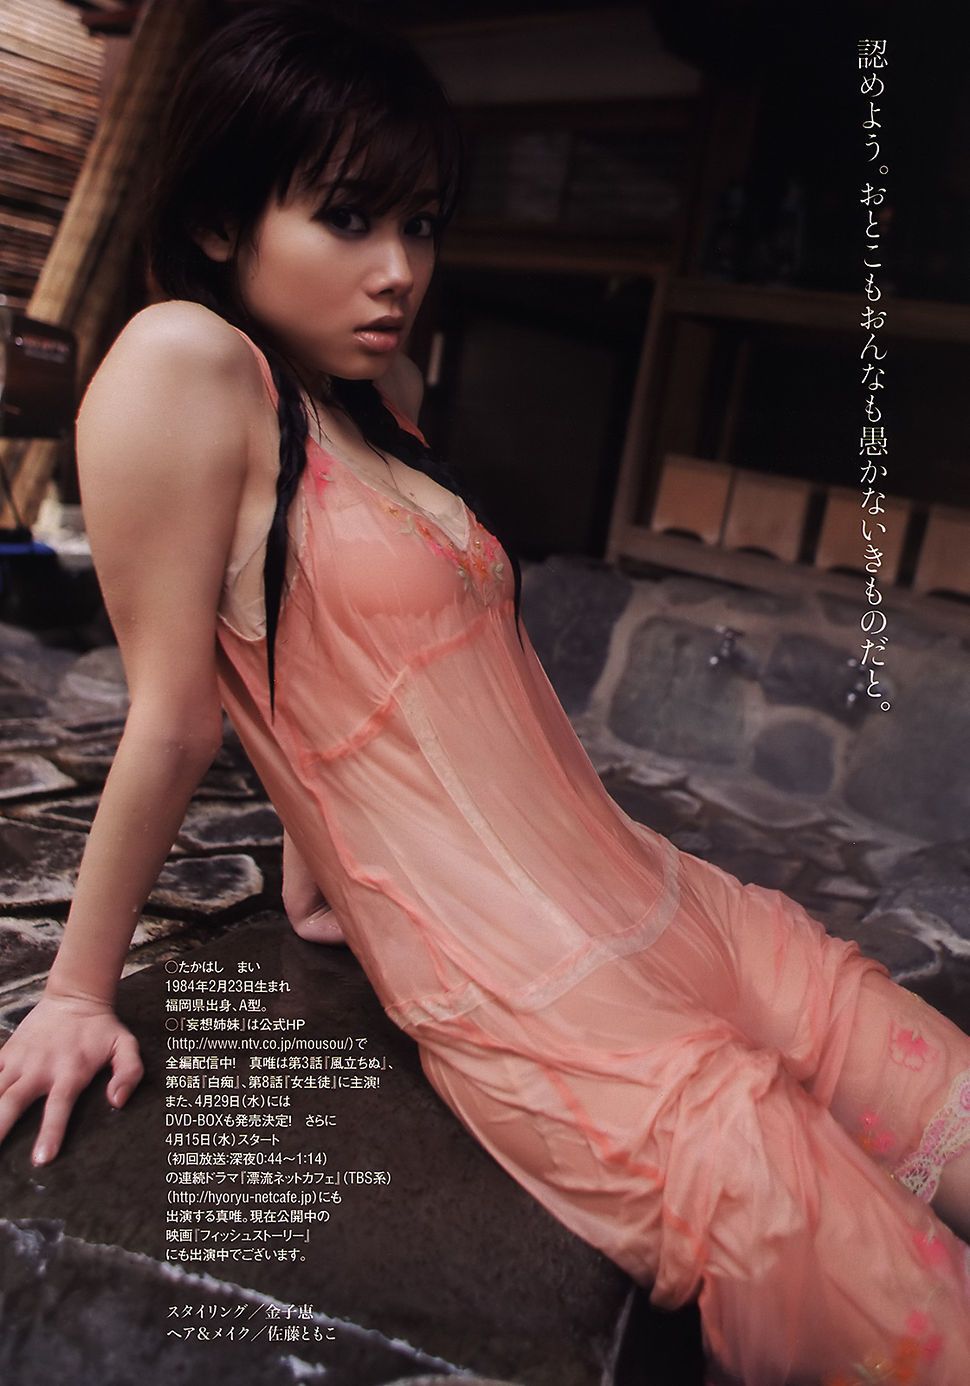 Seiko Iwaidô Sexy and Hottest Photos , Latest Pics